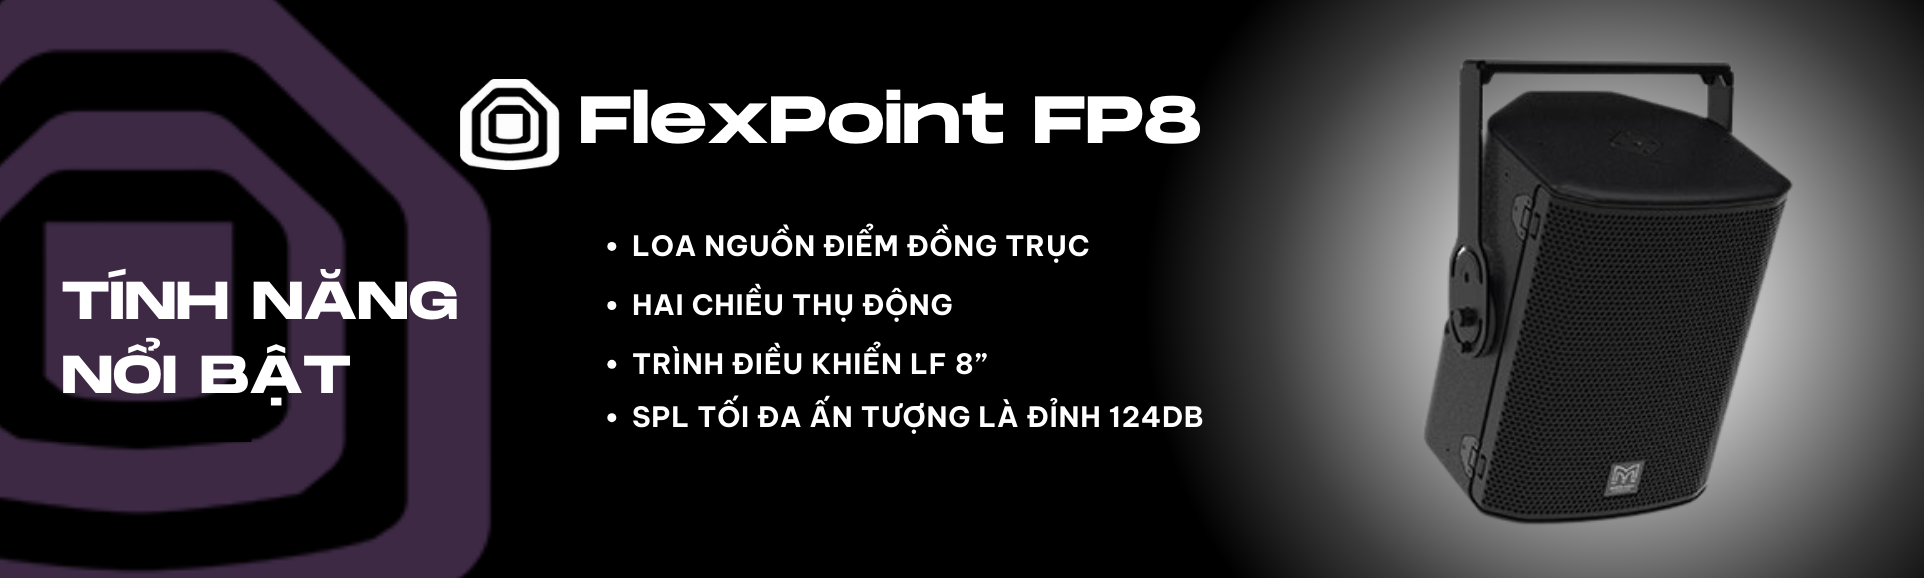 Tinh nang noi bat flexpoint fp8